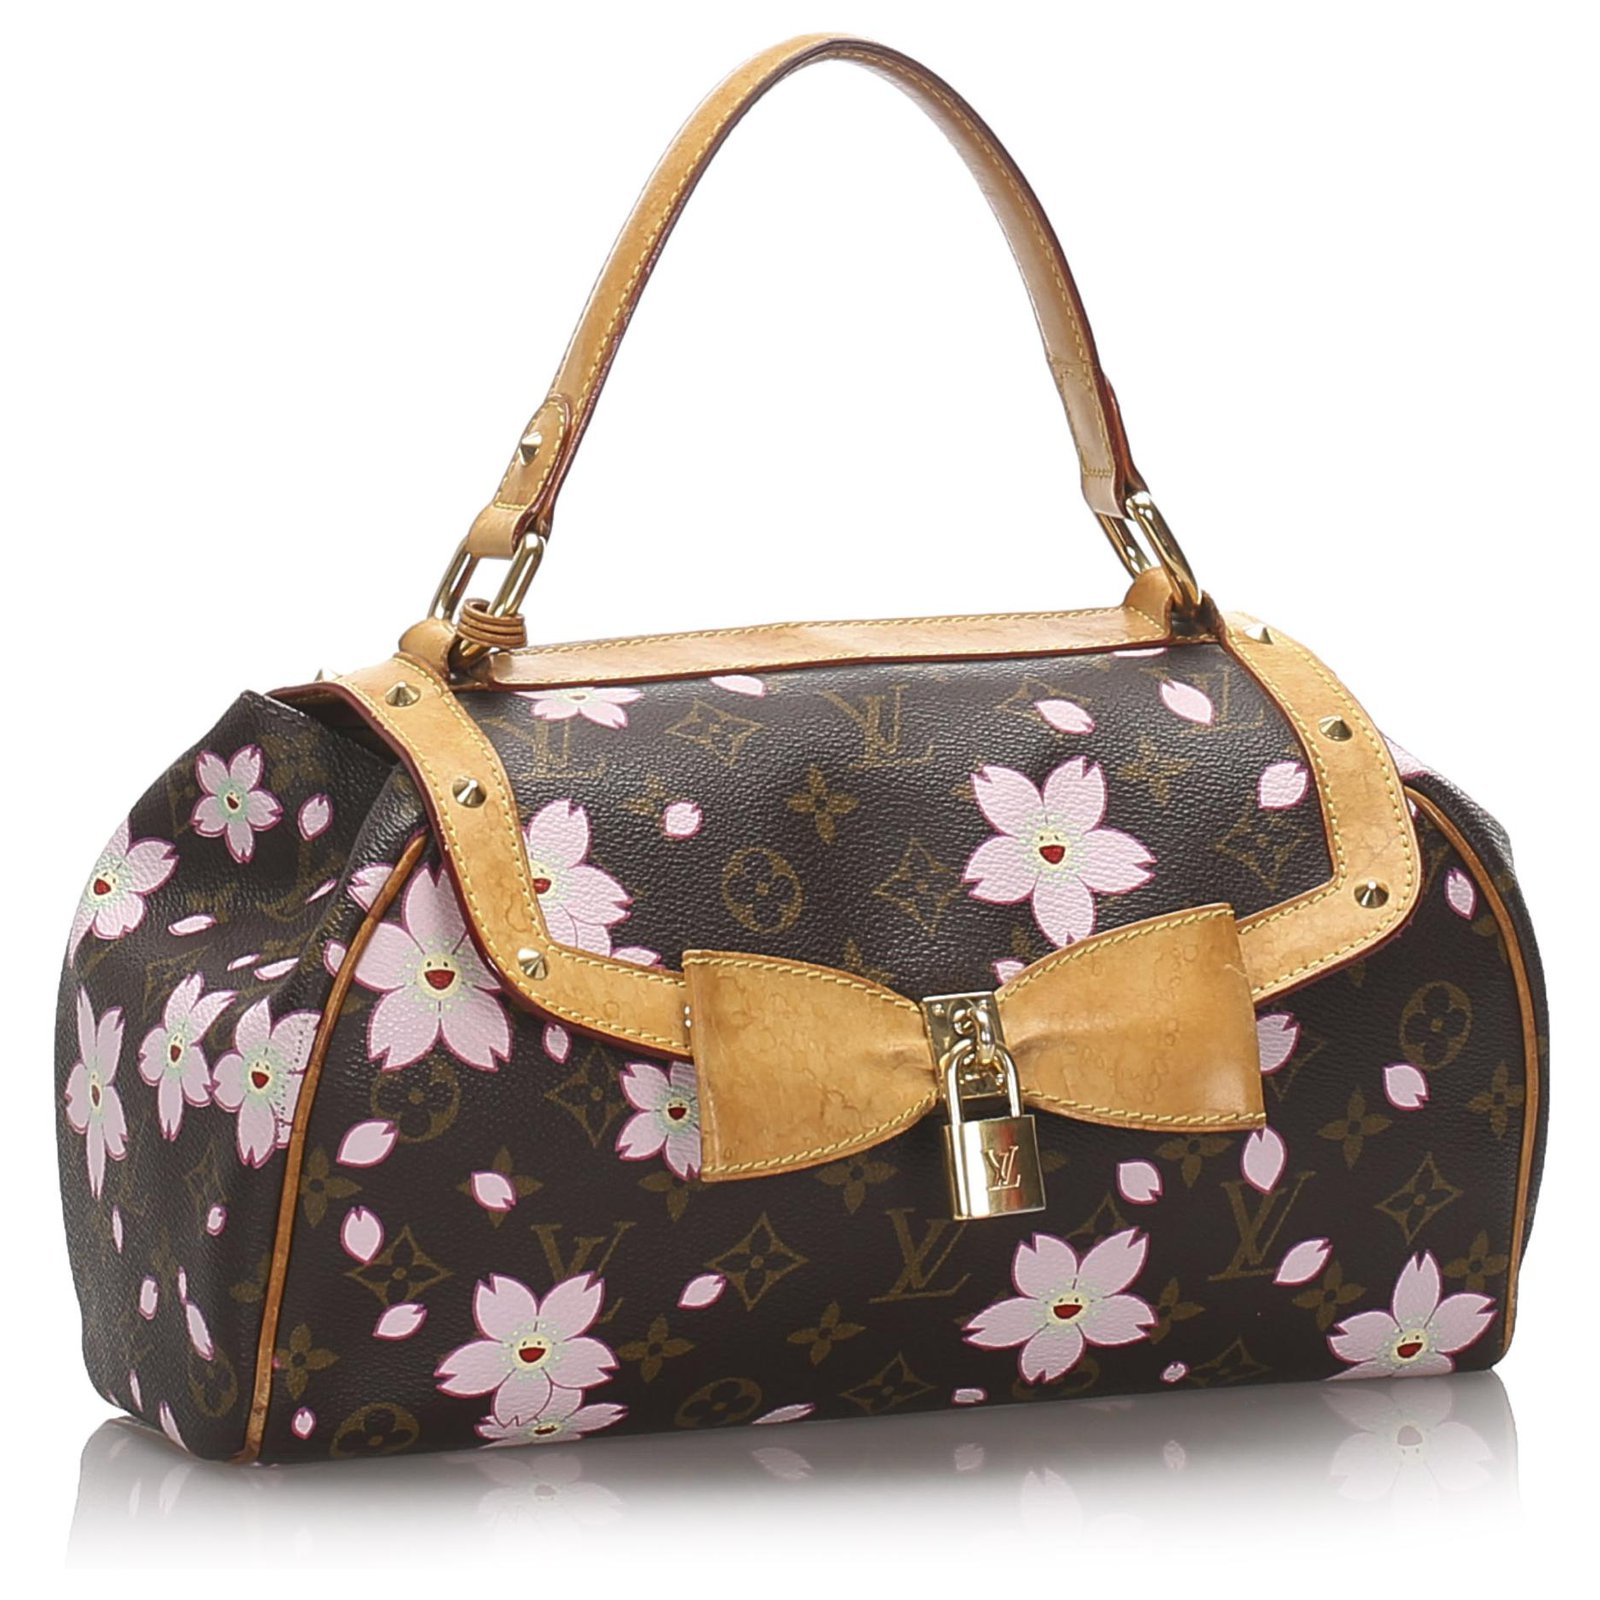 Louis Vuitton Monogram Cherry Blossom Sac Retro Bag Brown